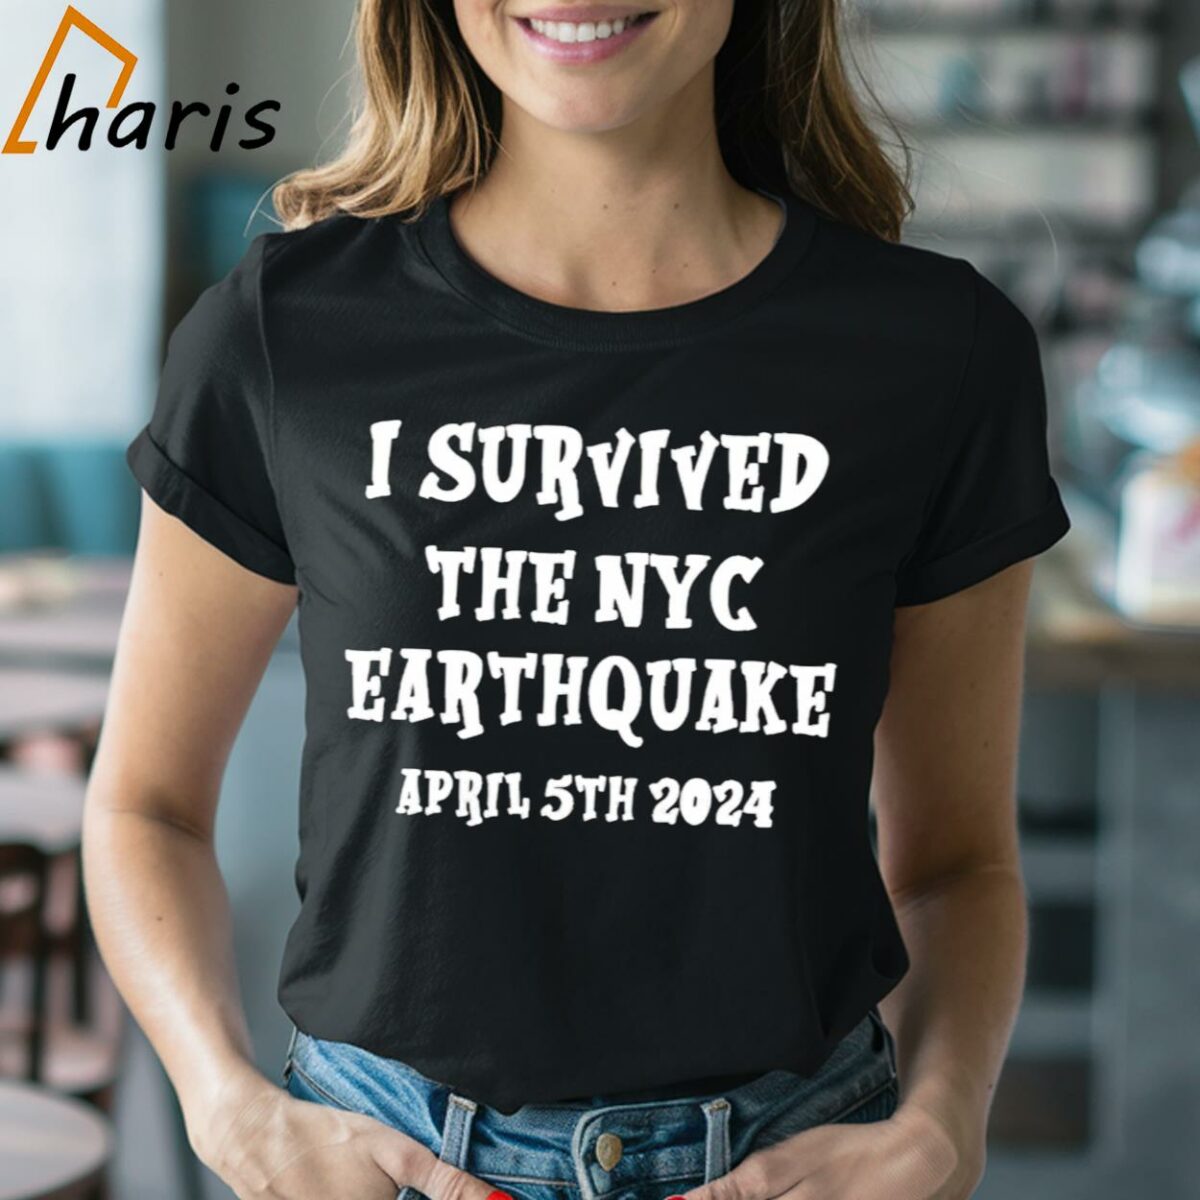 I Survived The NYC Earthquake T shirts 2 Shirt